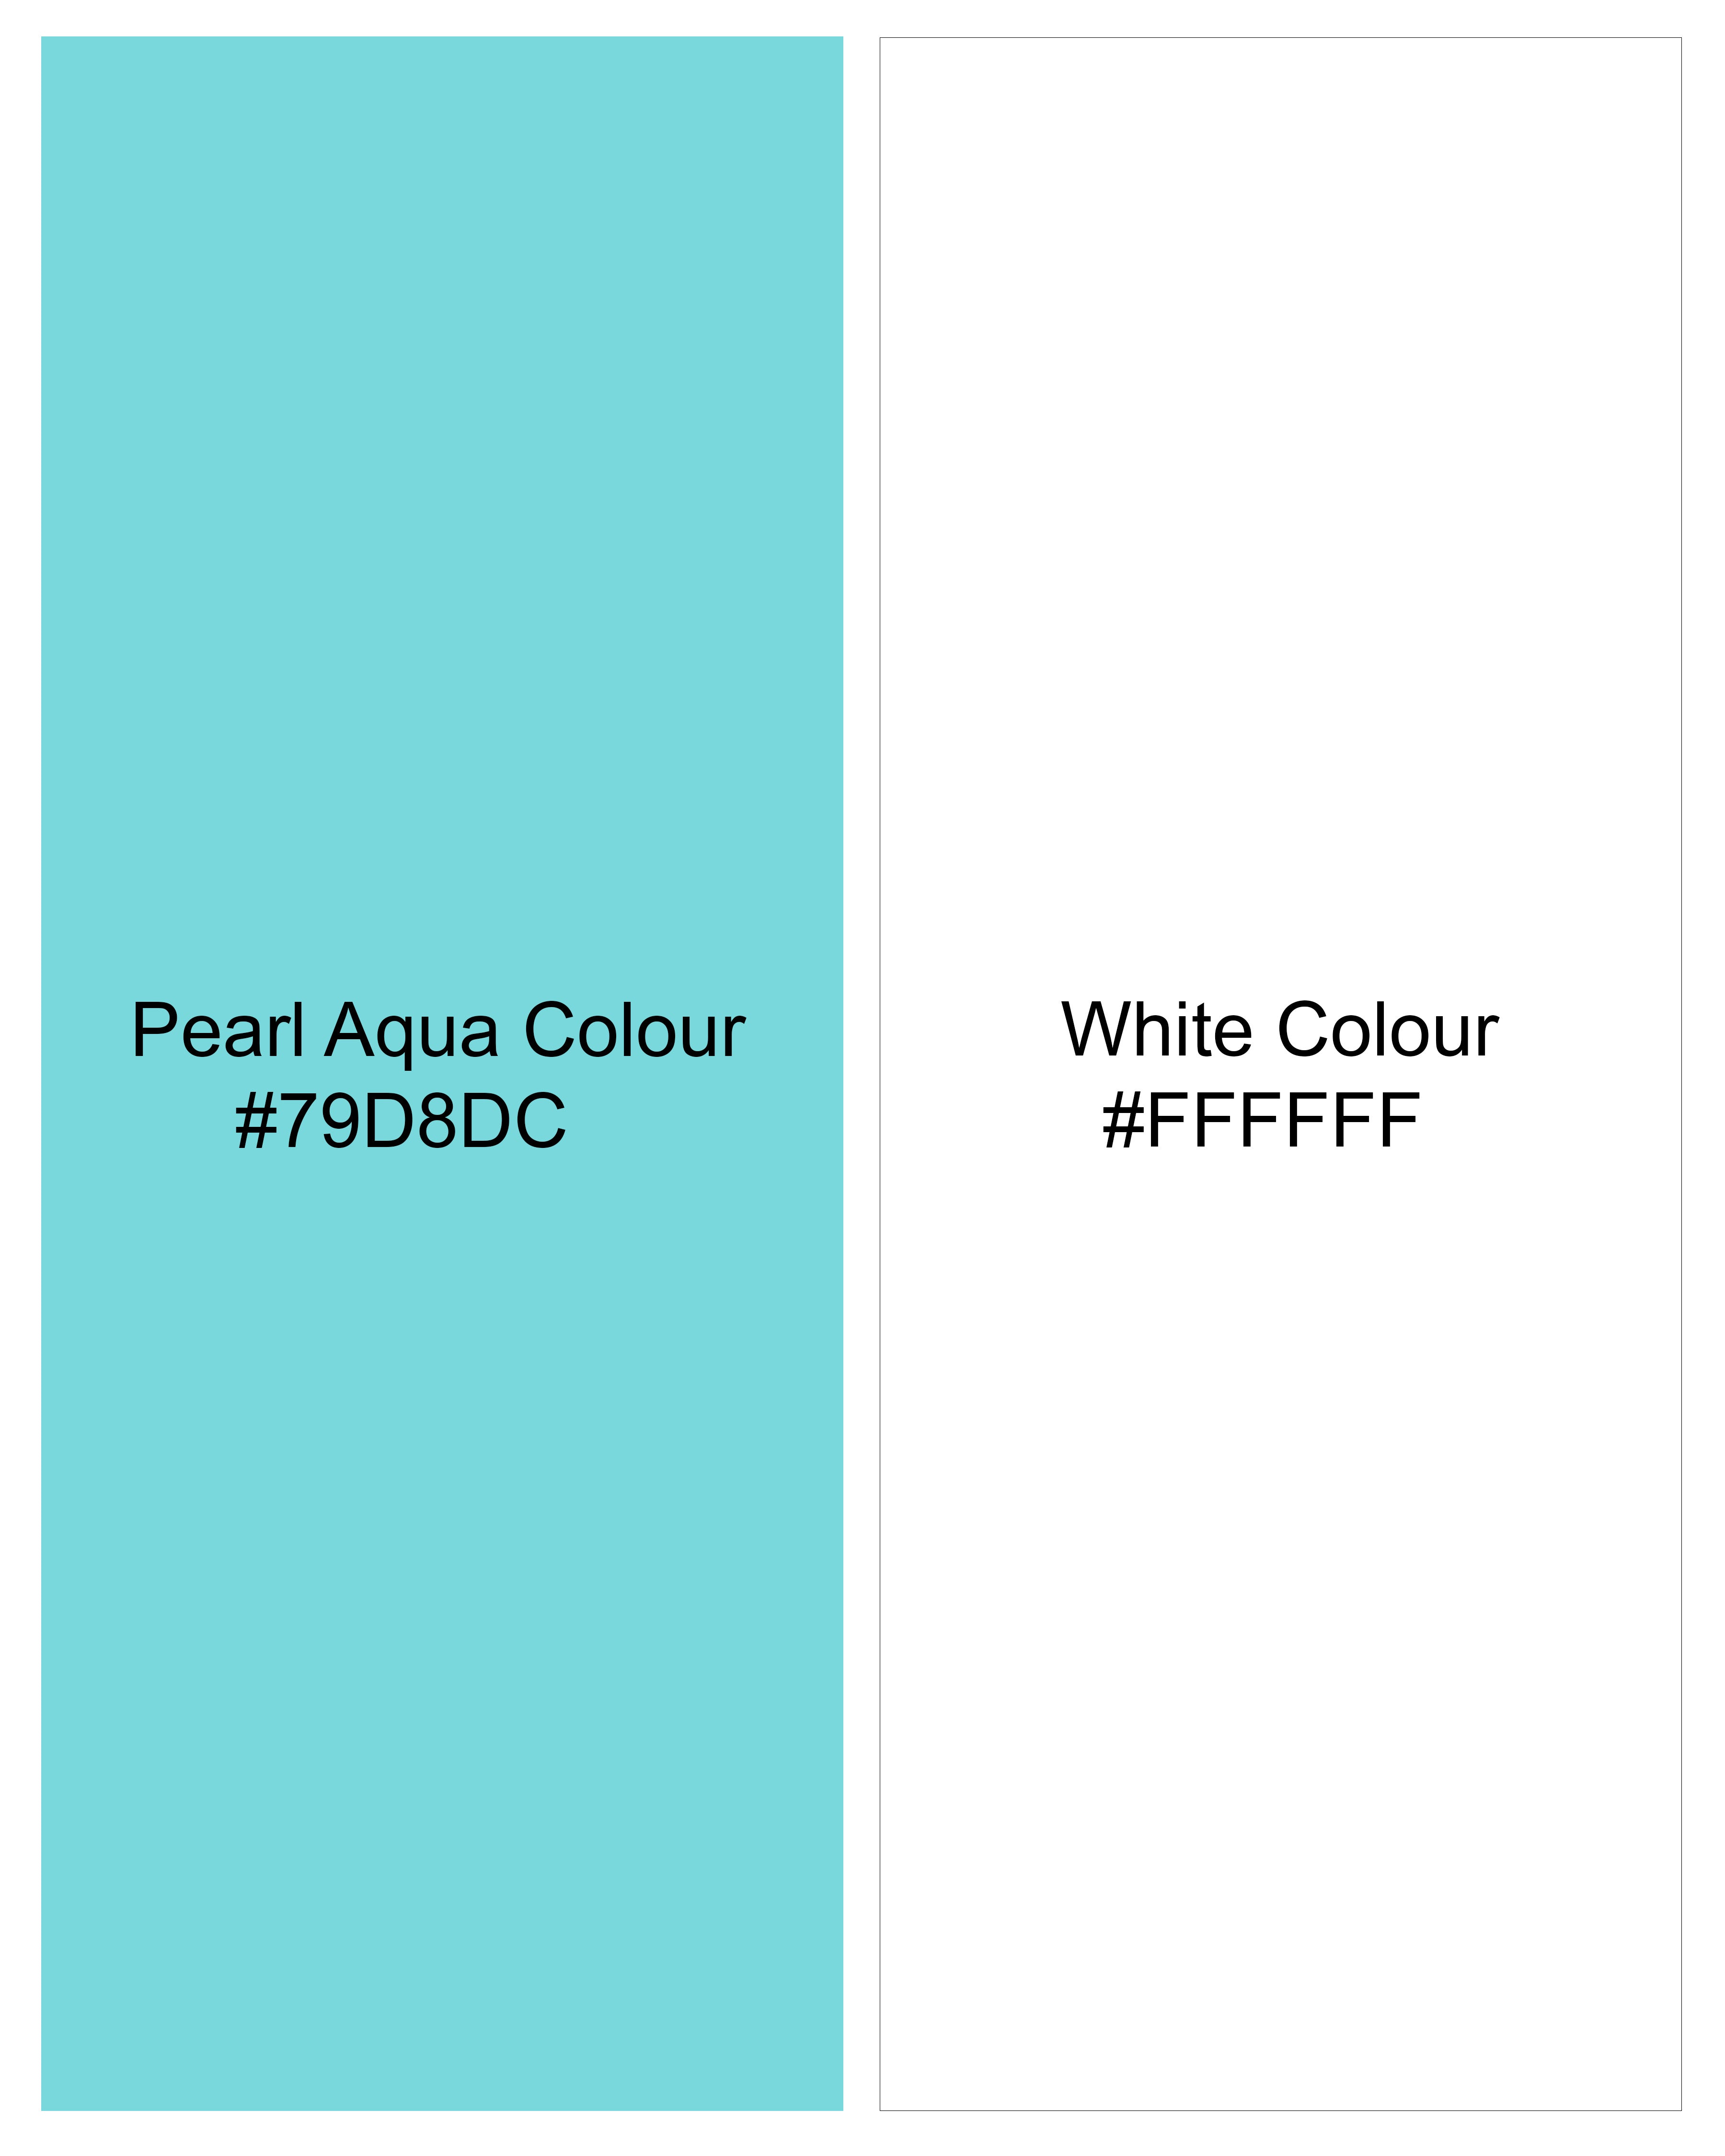 Pearl Aqua Blue with Off White Twill Checked Premium Cotton Shirt 9233-38,9233-H-38,9233-39,9233-H-39,9233-40,9233-H-40,9233-42,9233-H-42,9233-44,9233-H-44,9233-46,9233-H-46,9233-48,9233-H-48,9233-50,9233-H-50,9233-52,9233-H-52